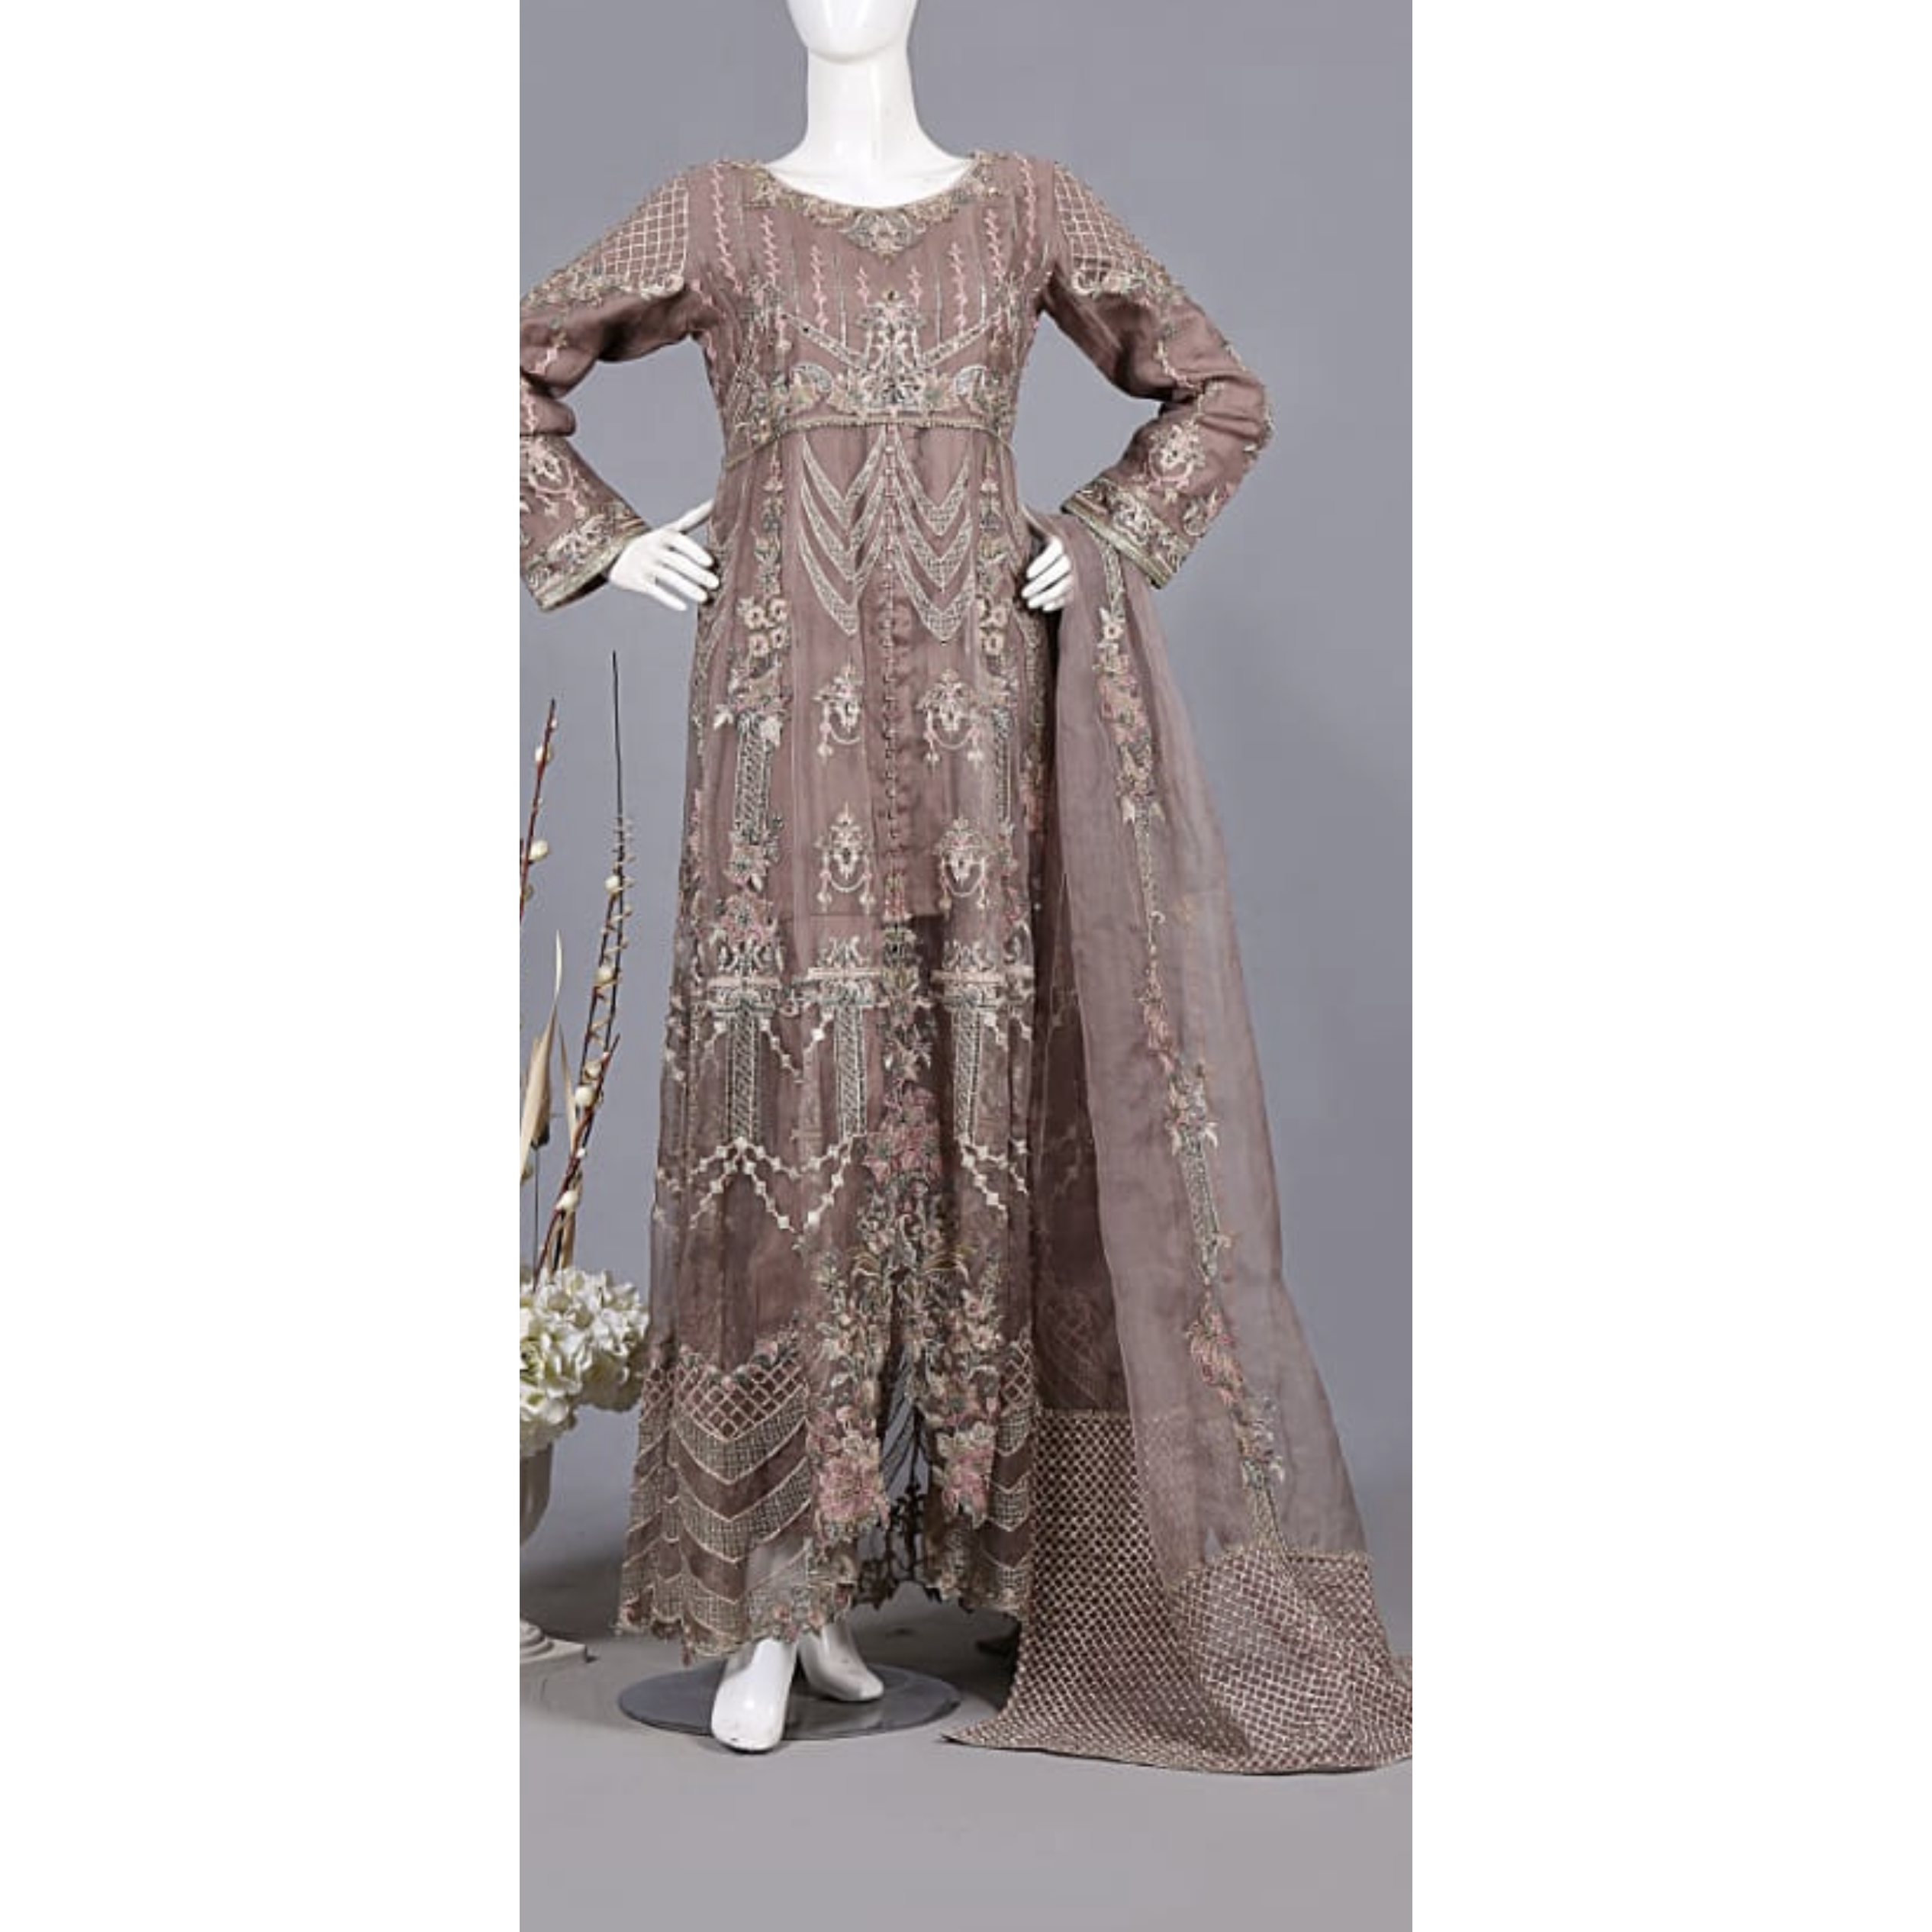 Tea pink full length dress